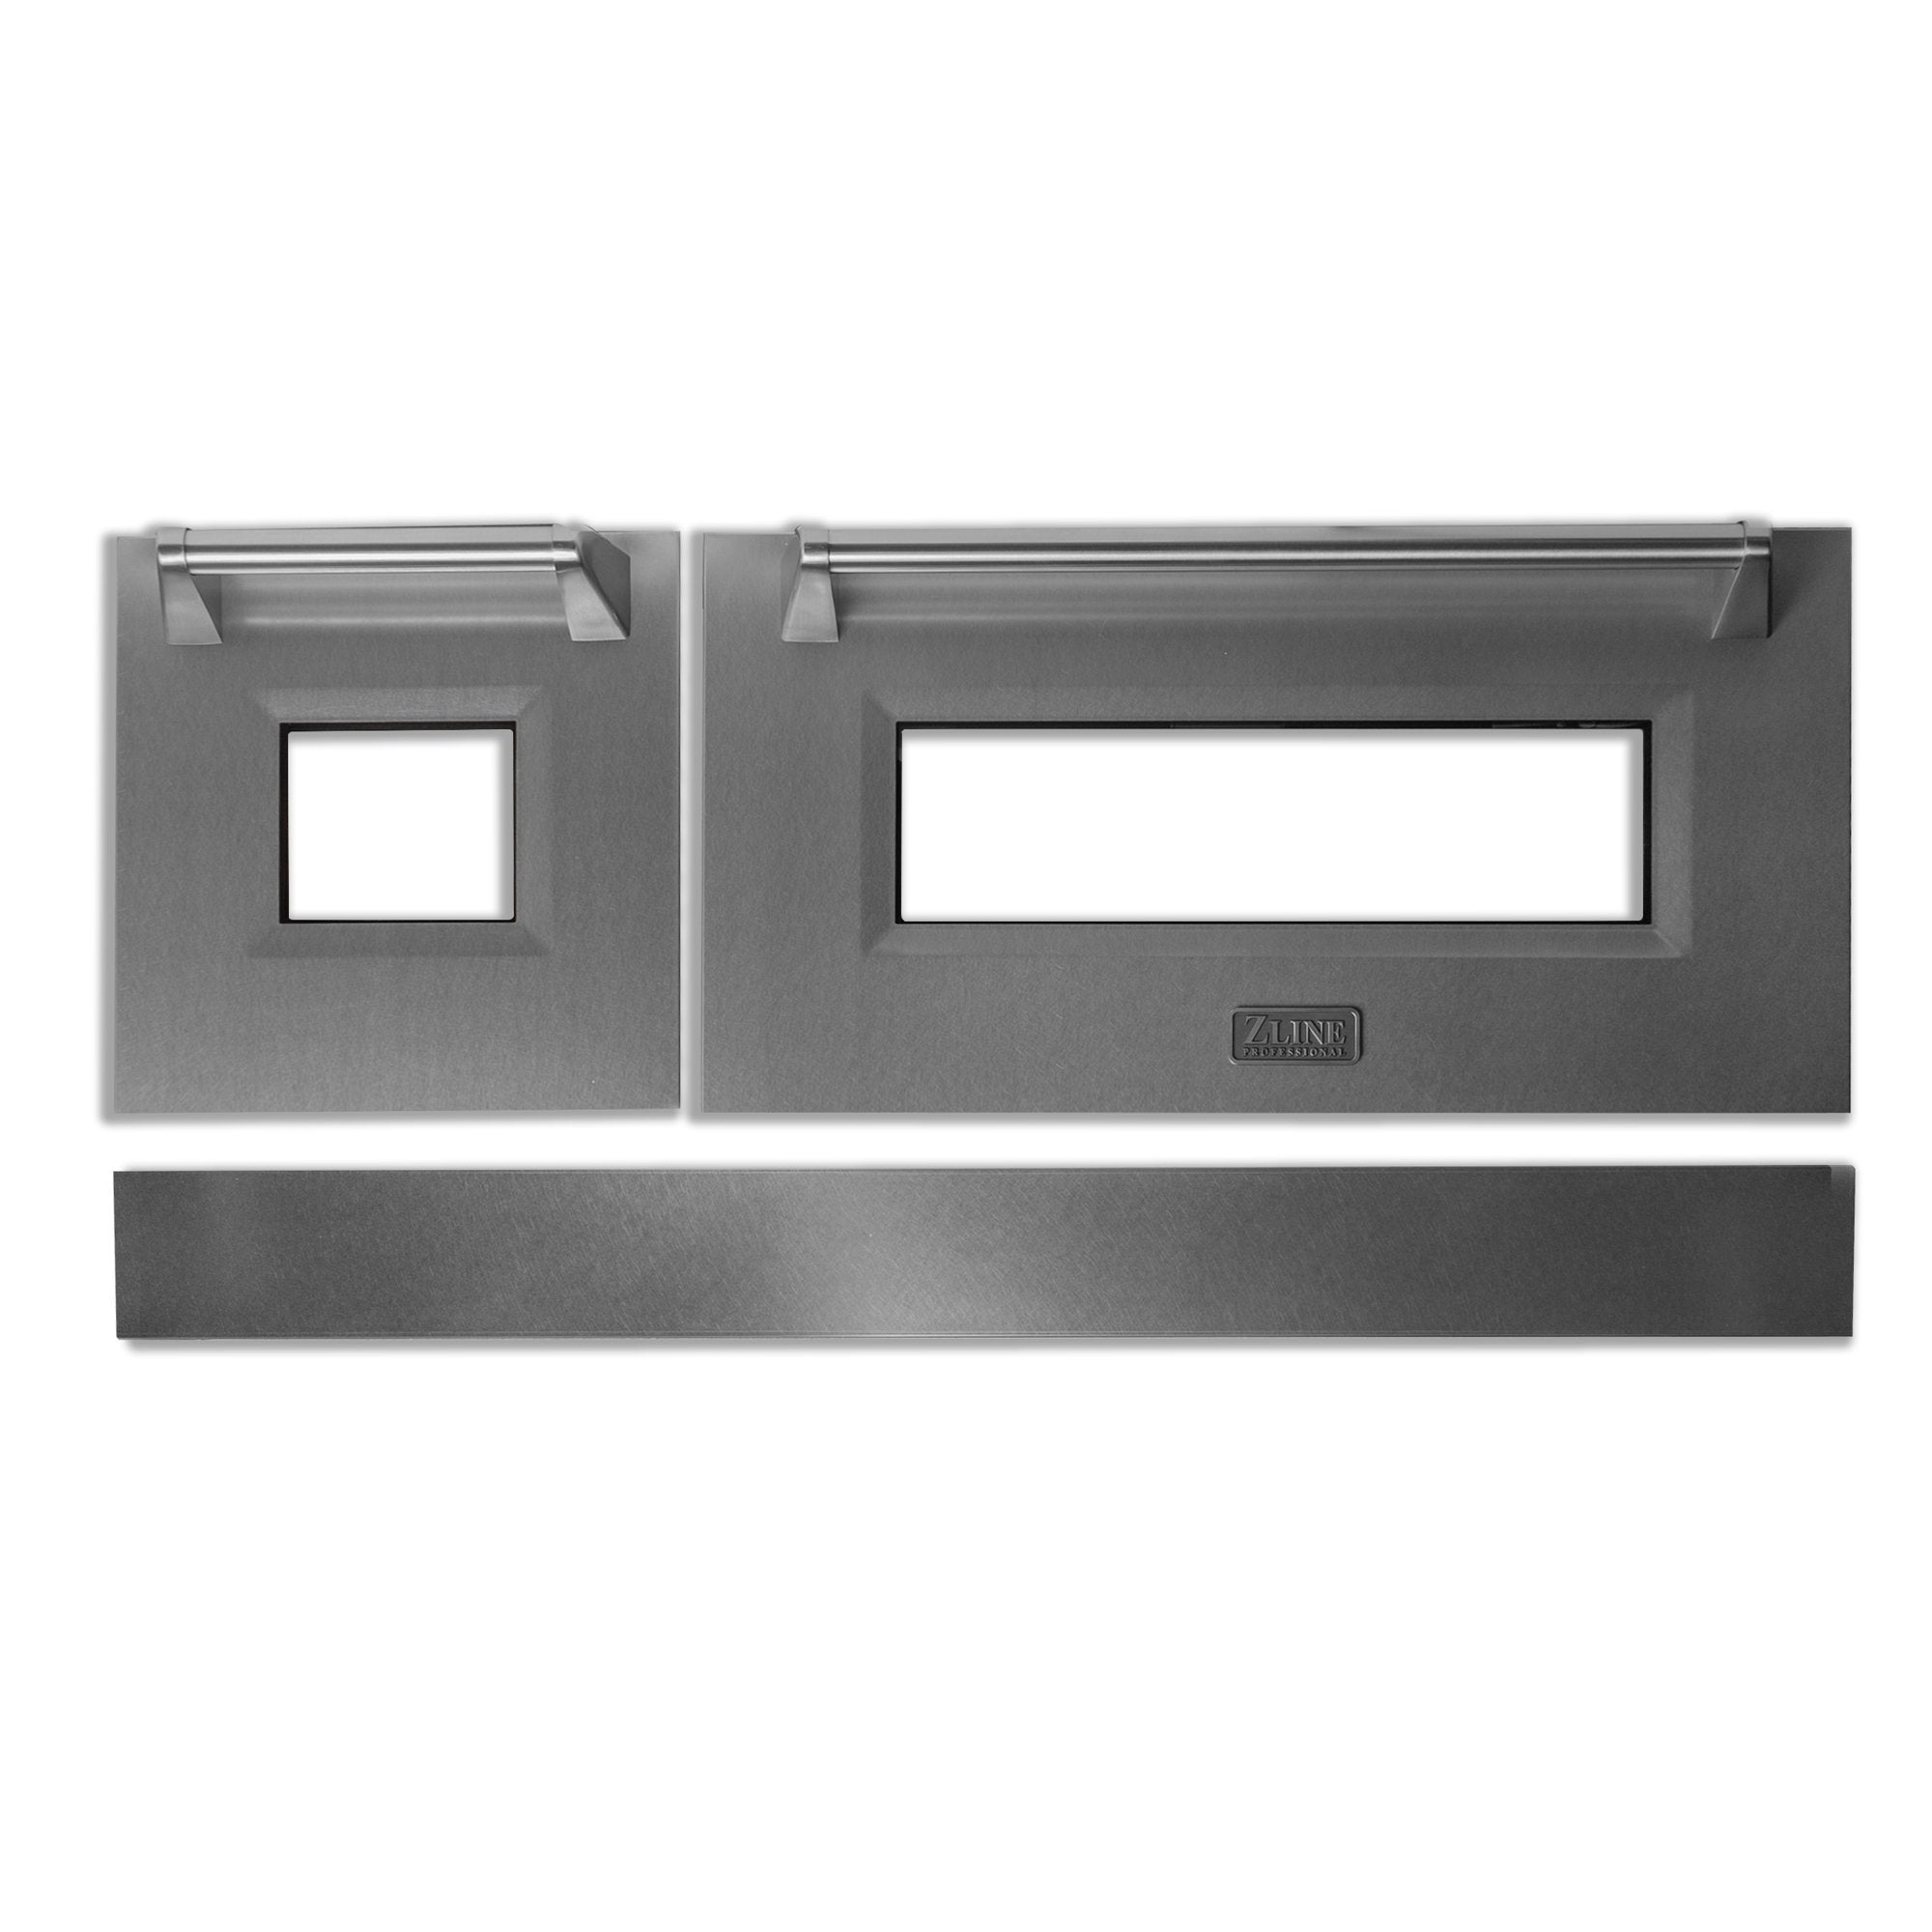 ZLINE Kitchen and Bath, ZLINE 48" Range Door in DuraSnow® Stainless Steel with Color Options, RA-DR-SN-48,